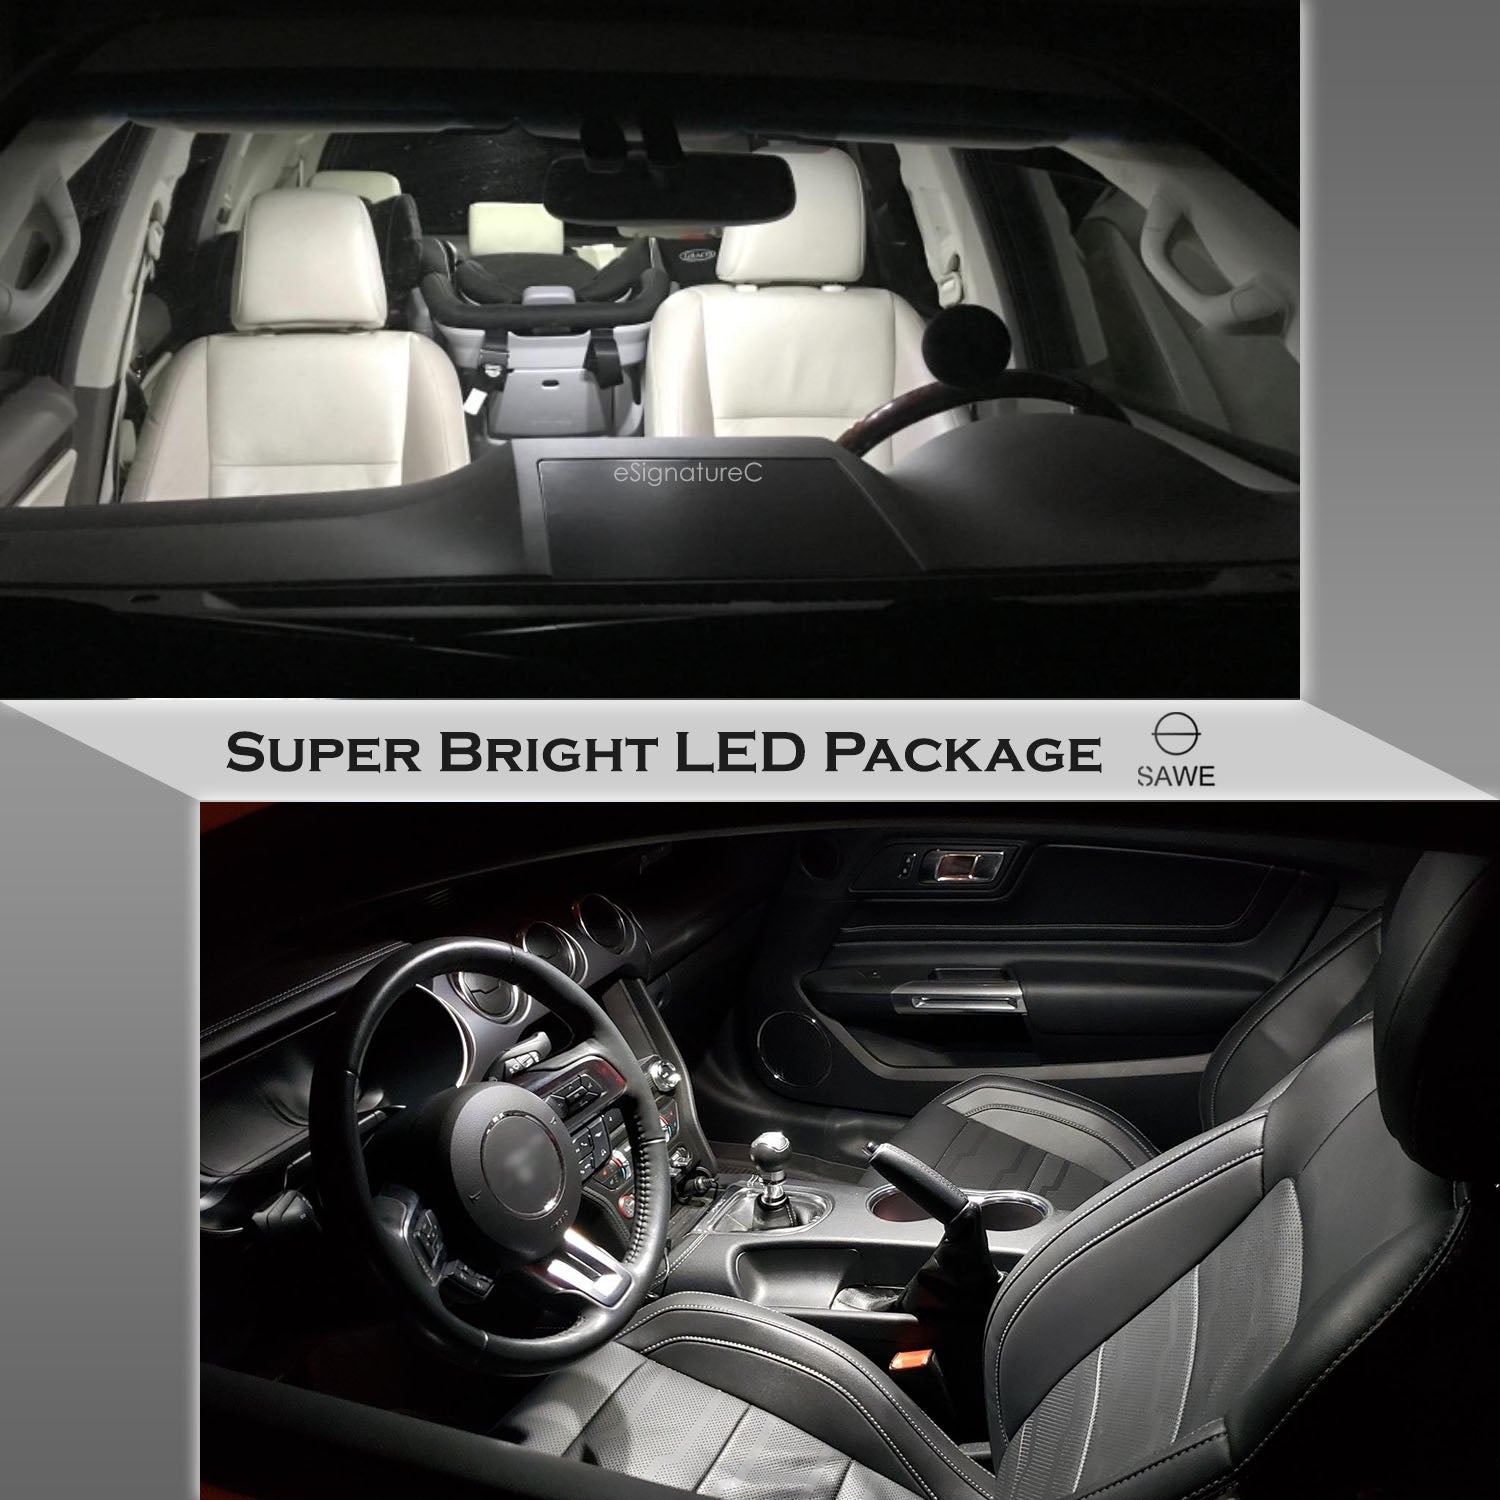 For Nissan Murano Interior LED Lights - Dome & Map Light Bulbs Package Kit for 2009 - 2014 - White